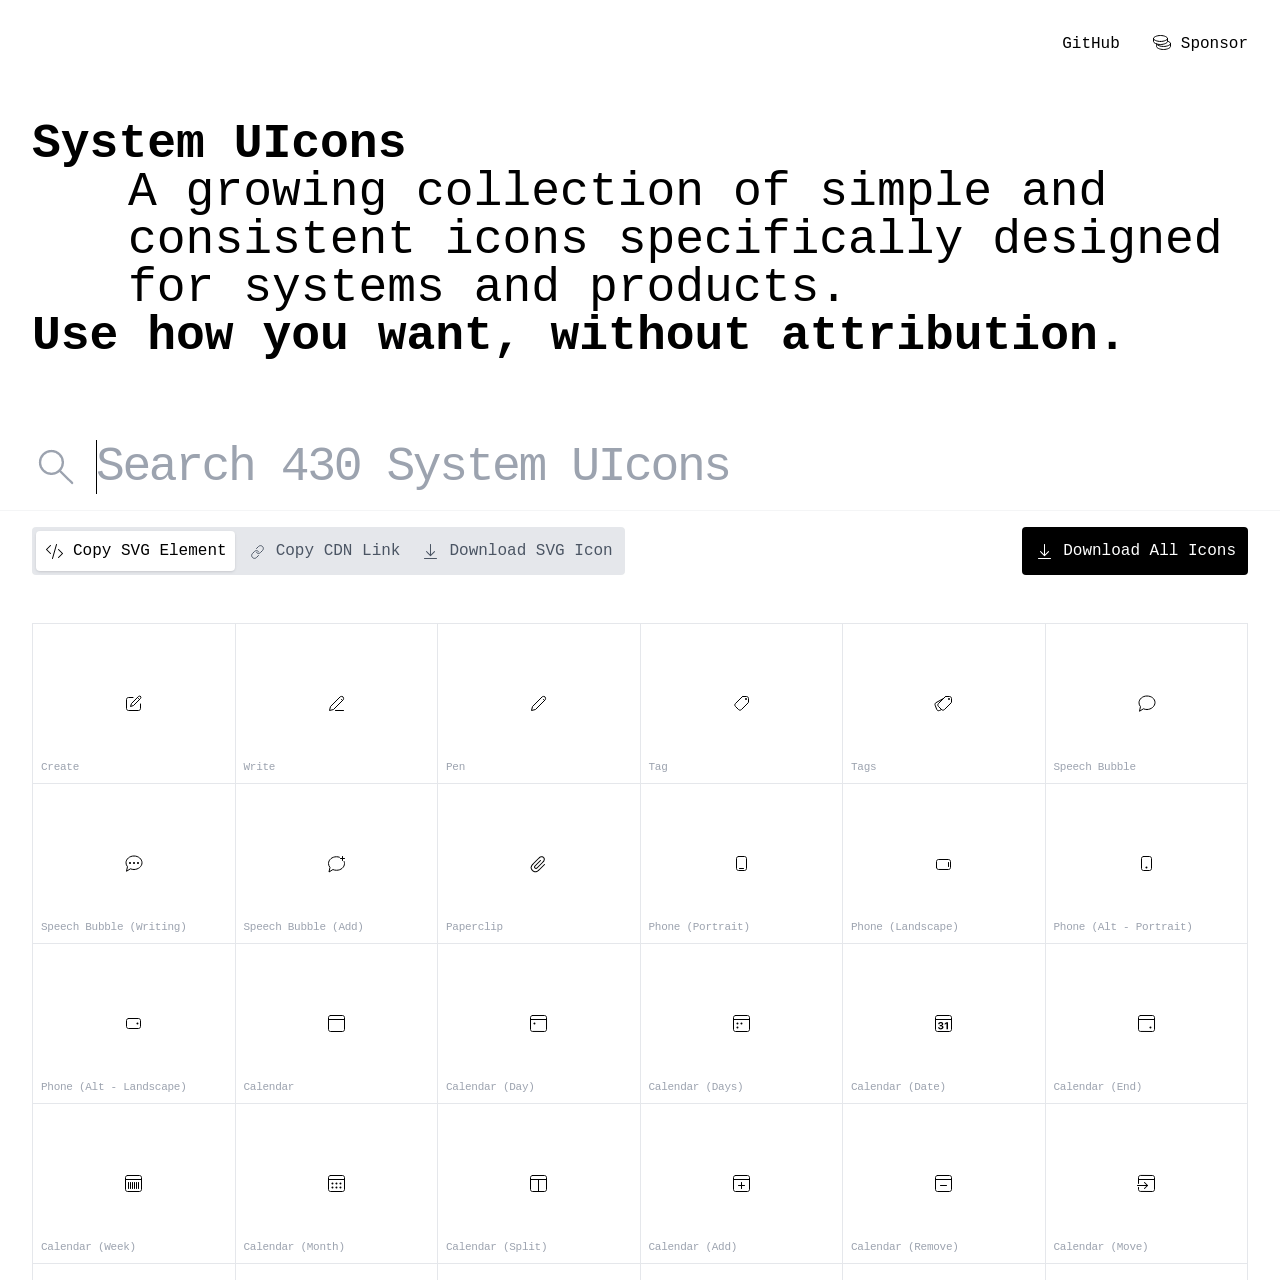 Screenshot of System UIcons website